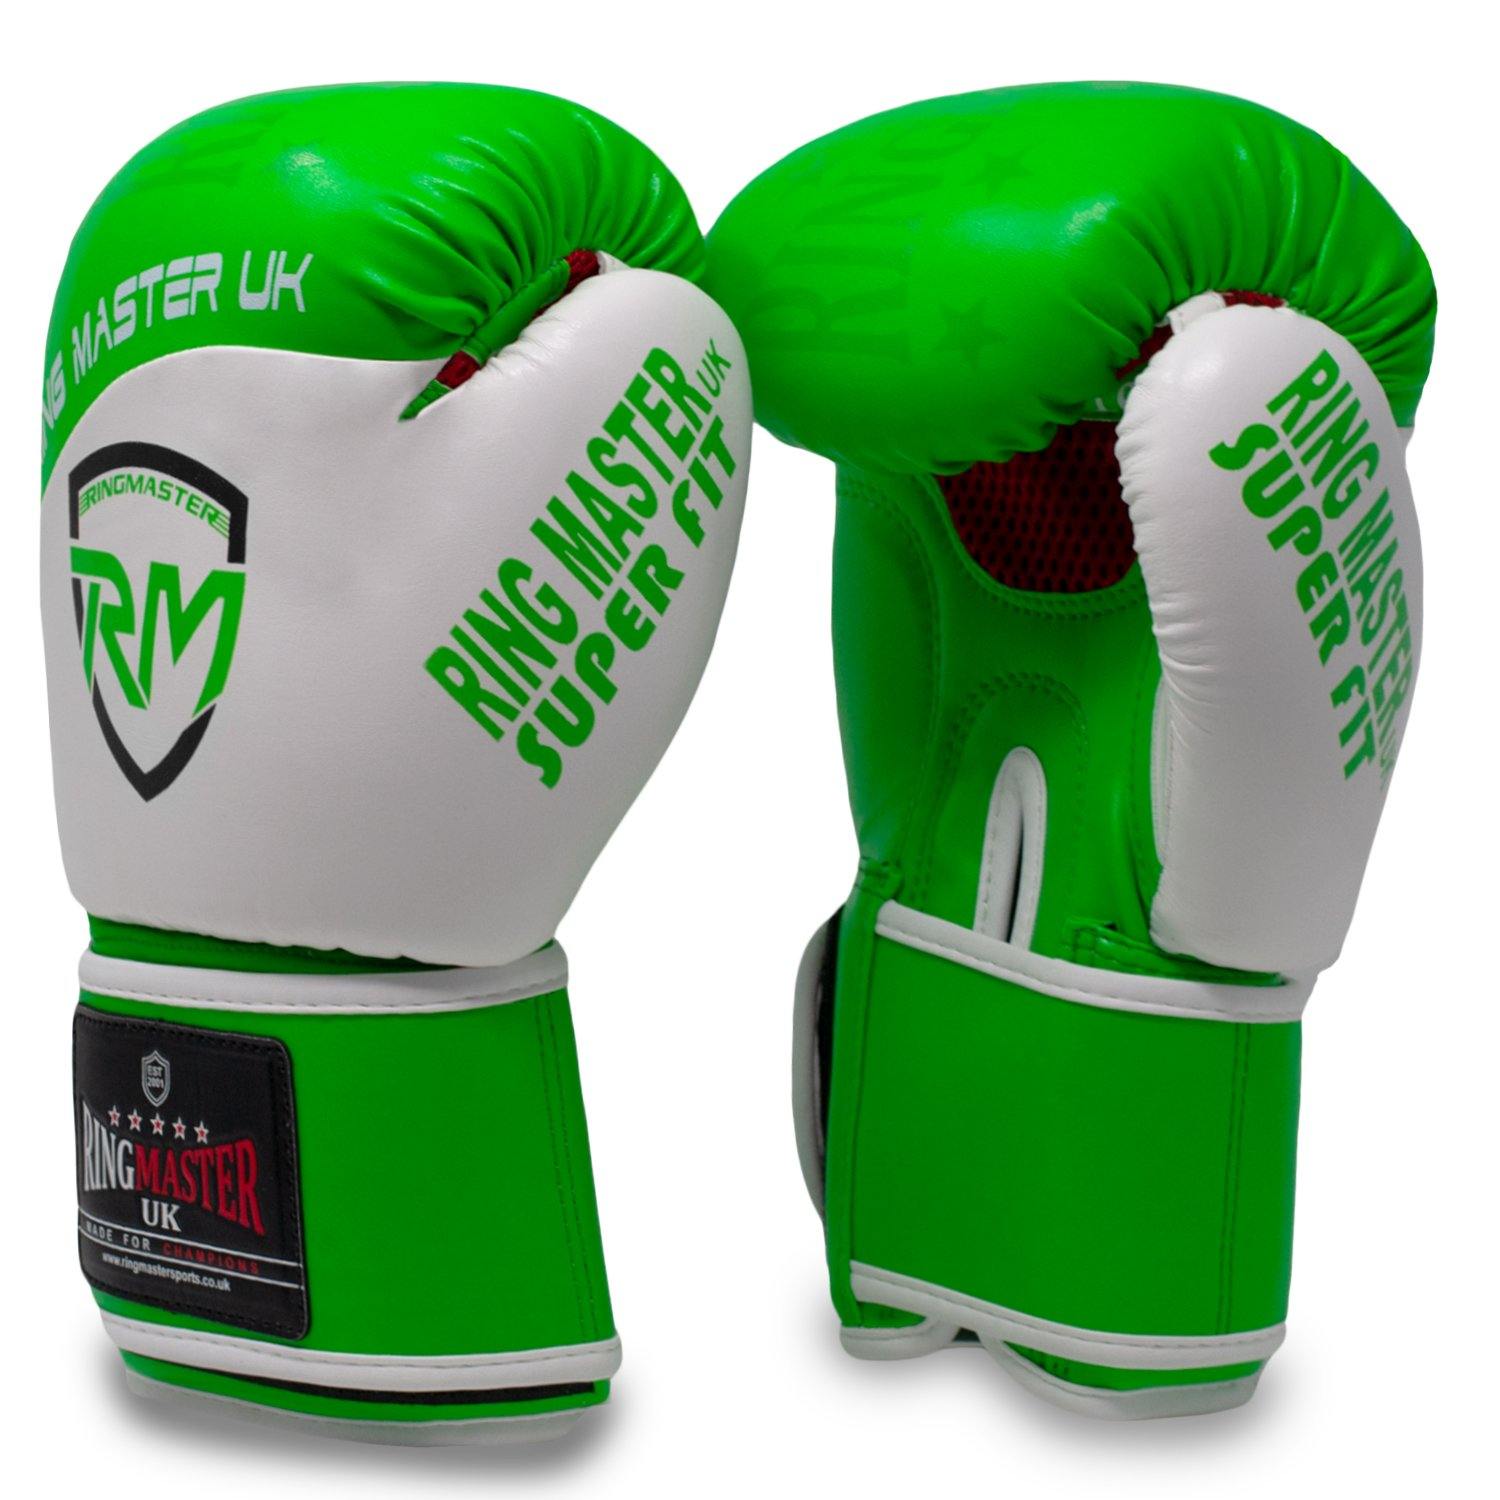 RingMaster Sports Boxing Gloves Superfit Series - RingMaster Sports